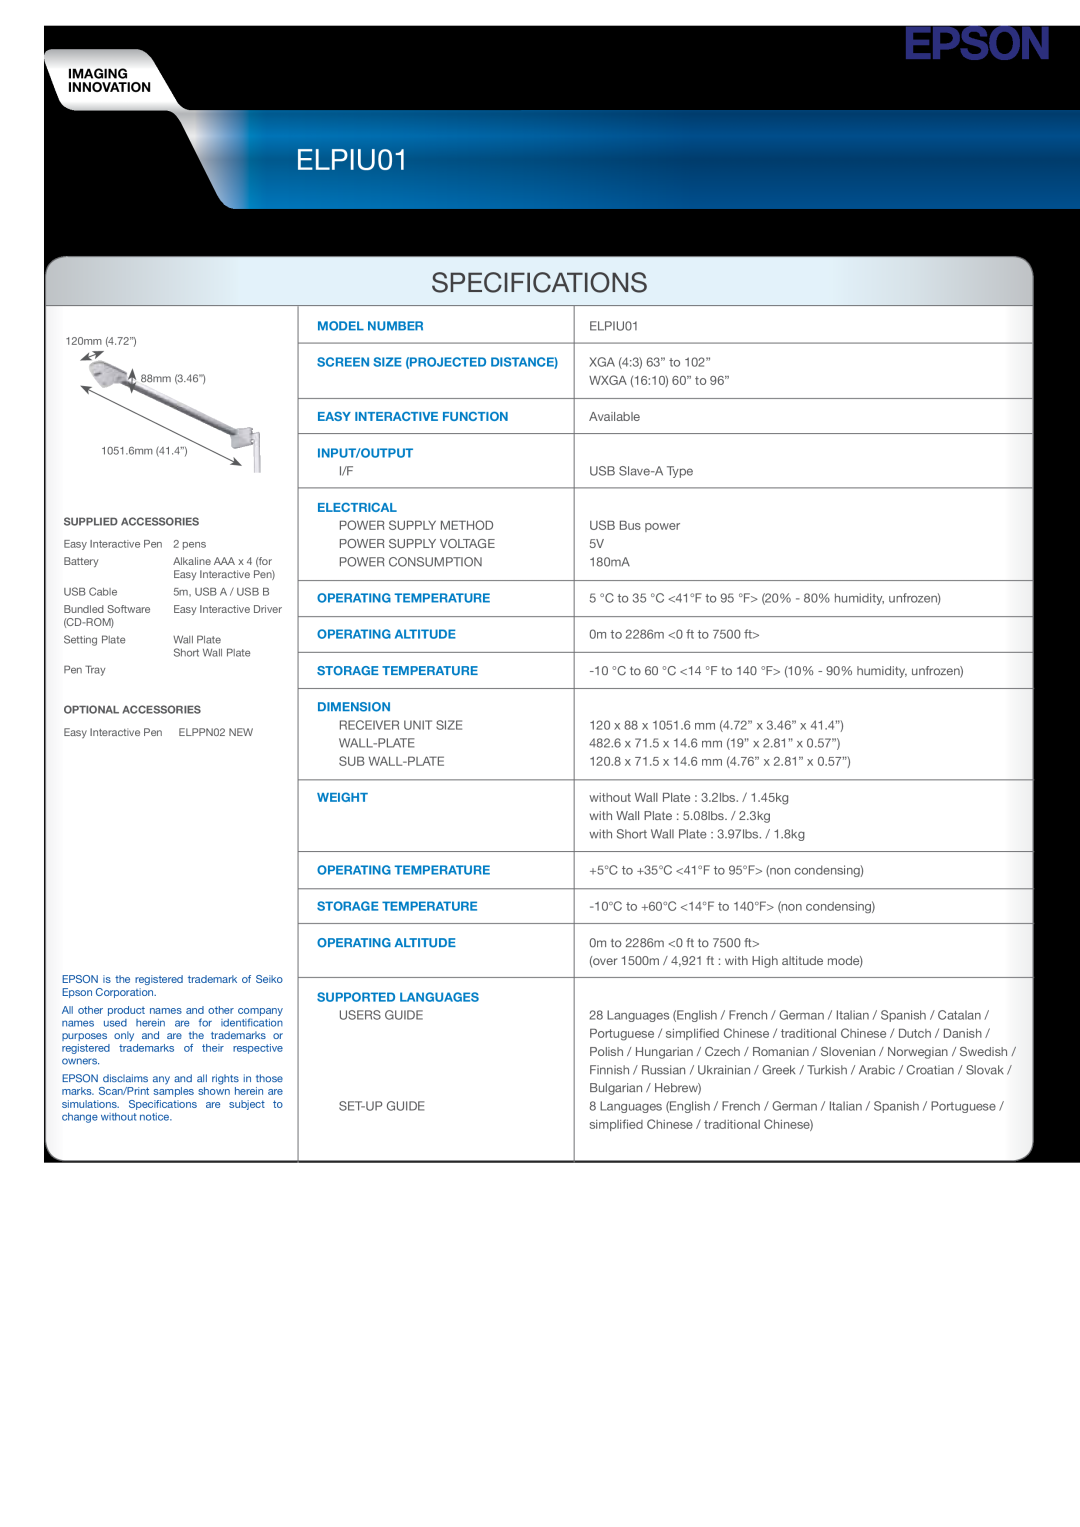 Epson ELPIU01, ELPDC11, ELPDC06 manual Specifications, Imaging Innovation 